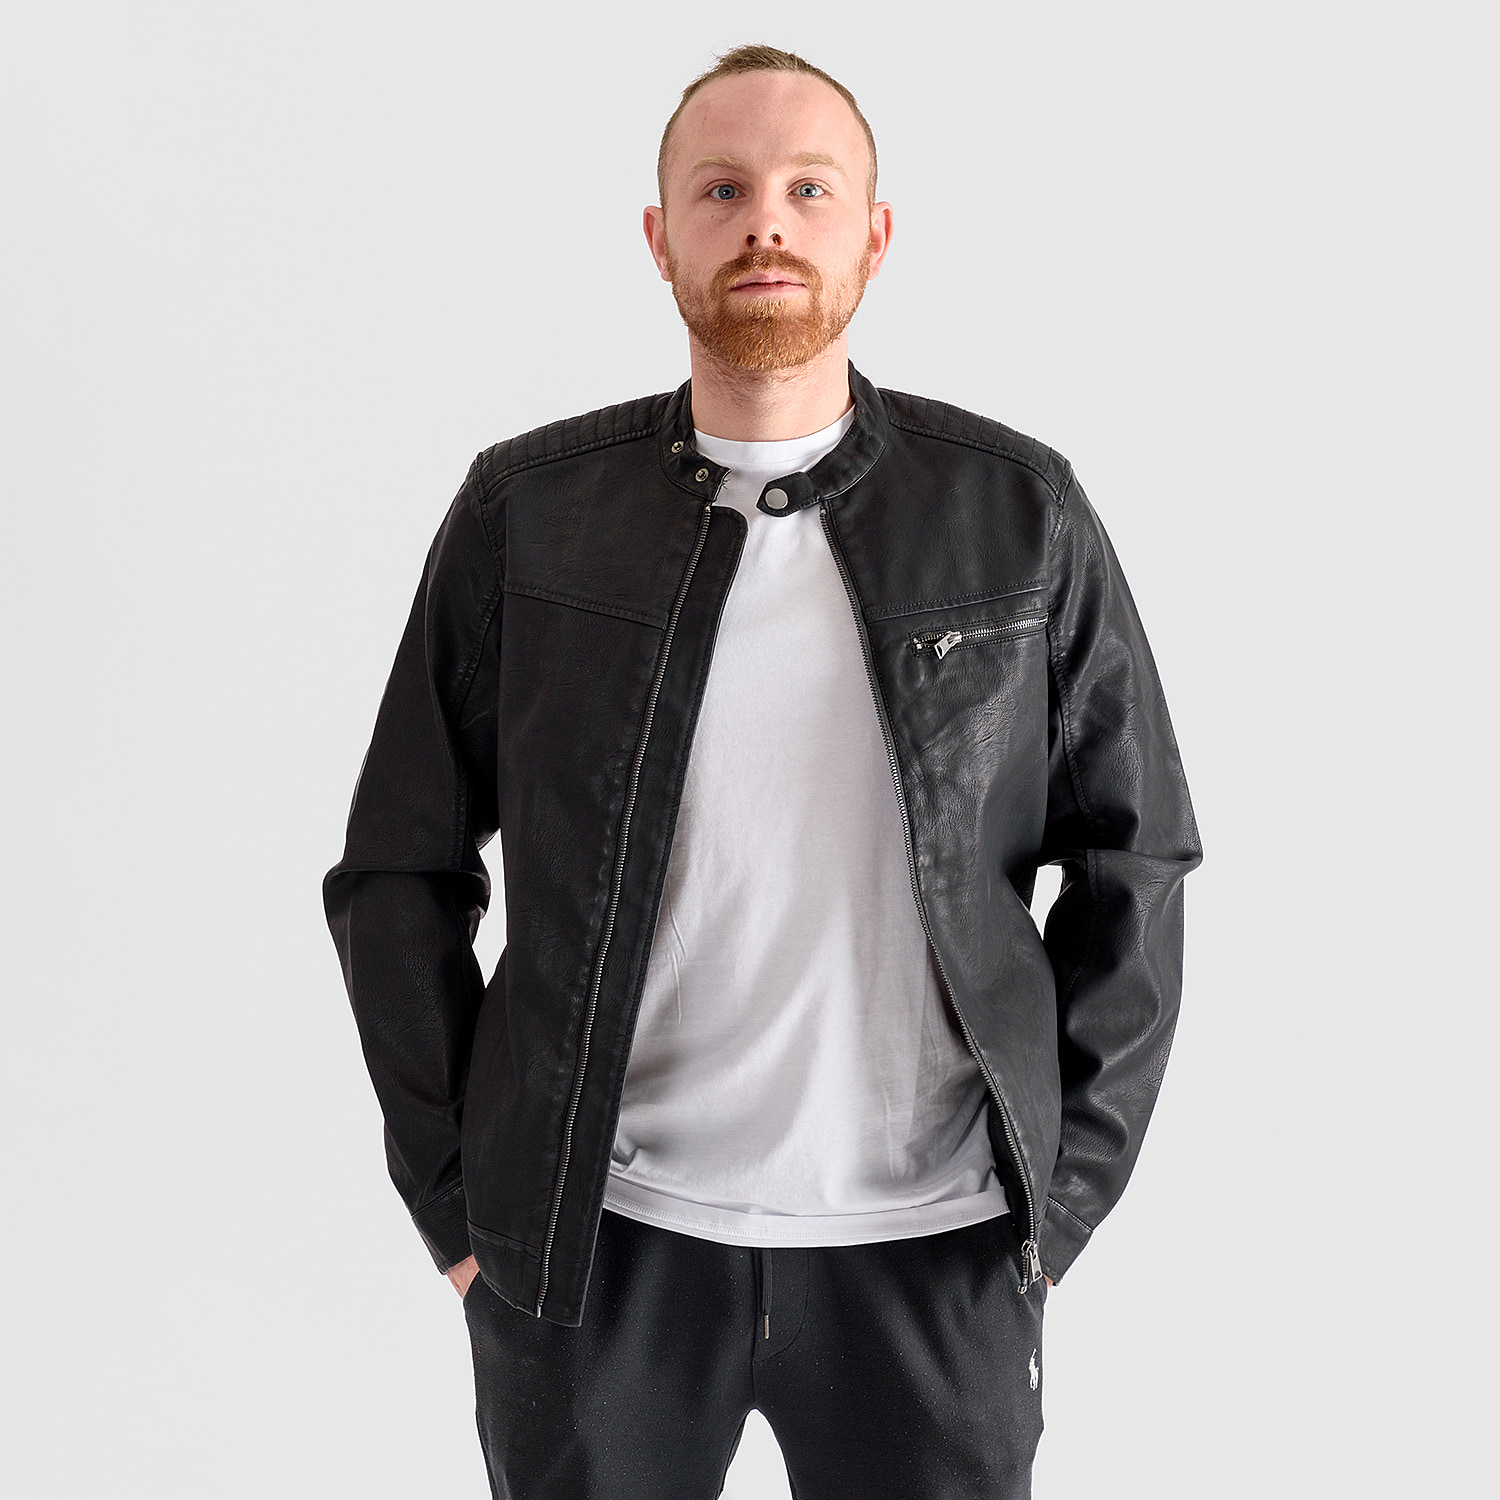 Leather-Jacket-Size-1x1-cm-Black